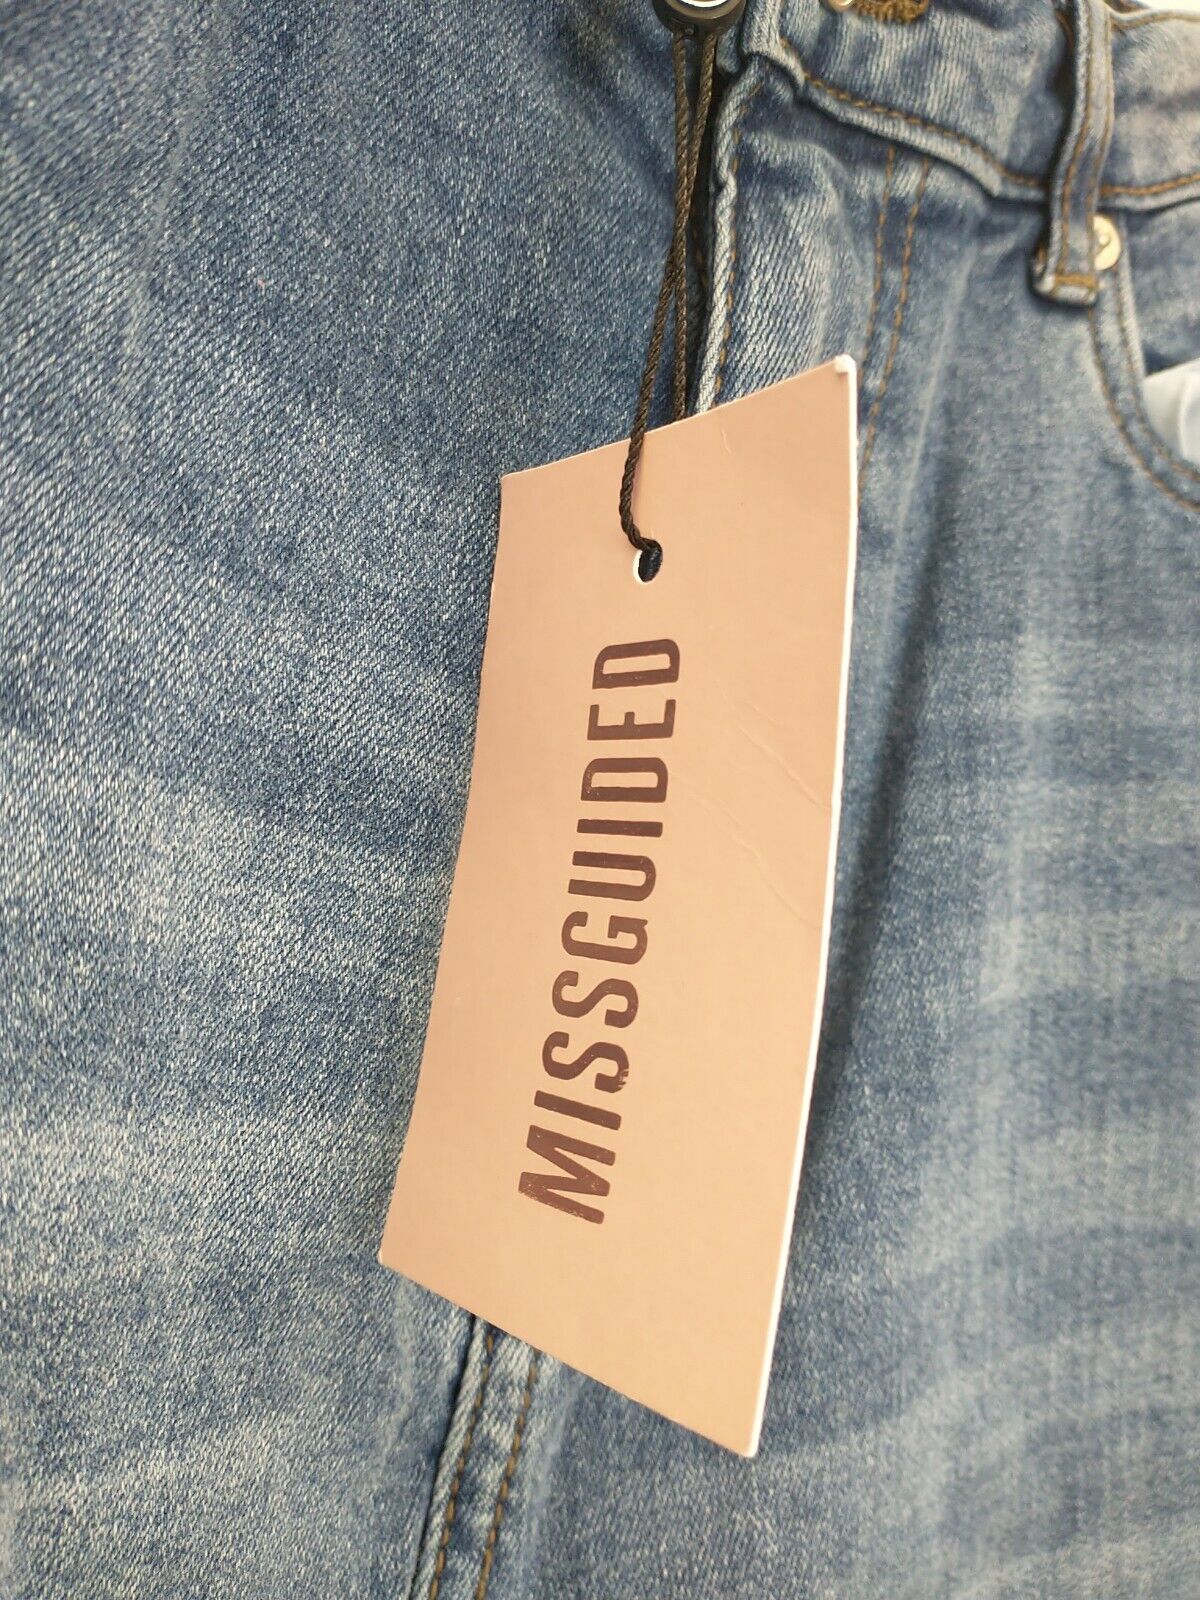 Missguided Slim Fit Flared Jeans Size UK 8 **** V35